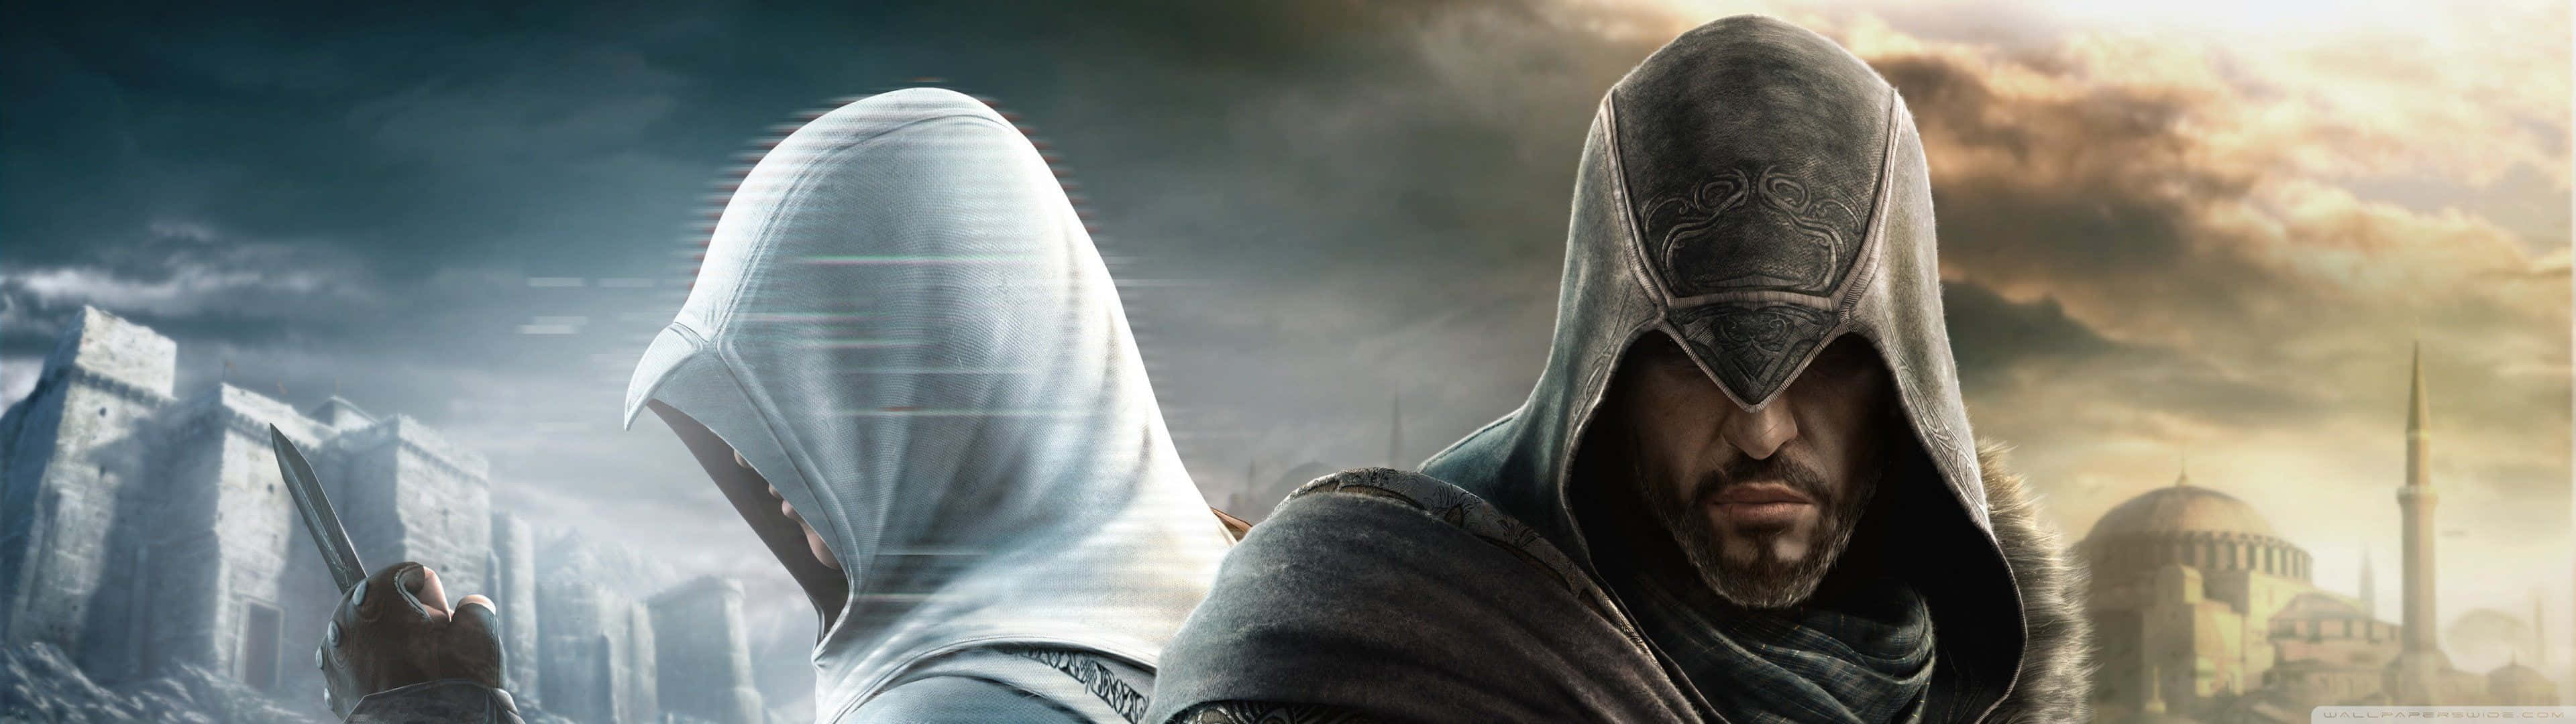 Assassin's Creed Iii 3840 X 1080 Gaming Wallpaper